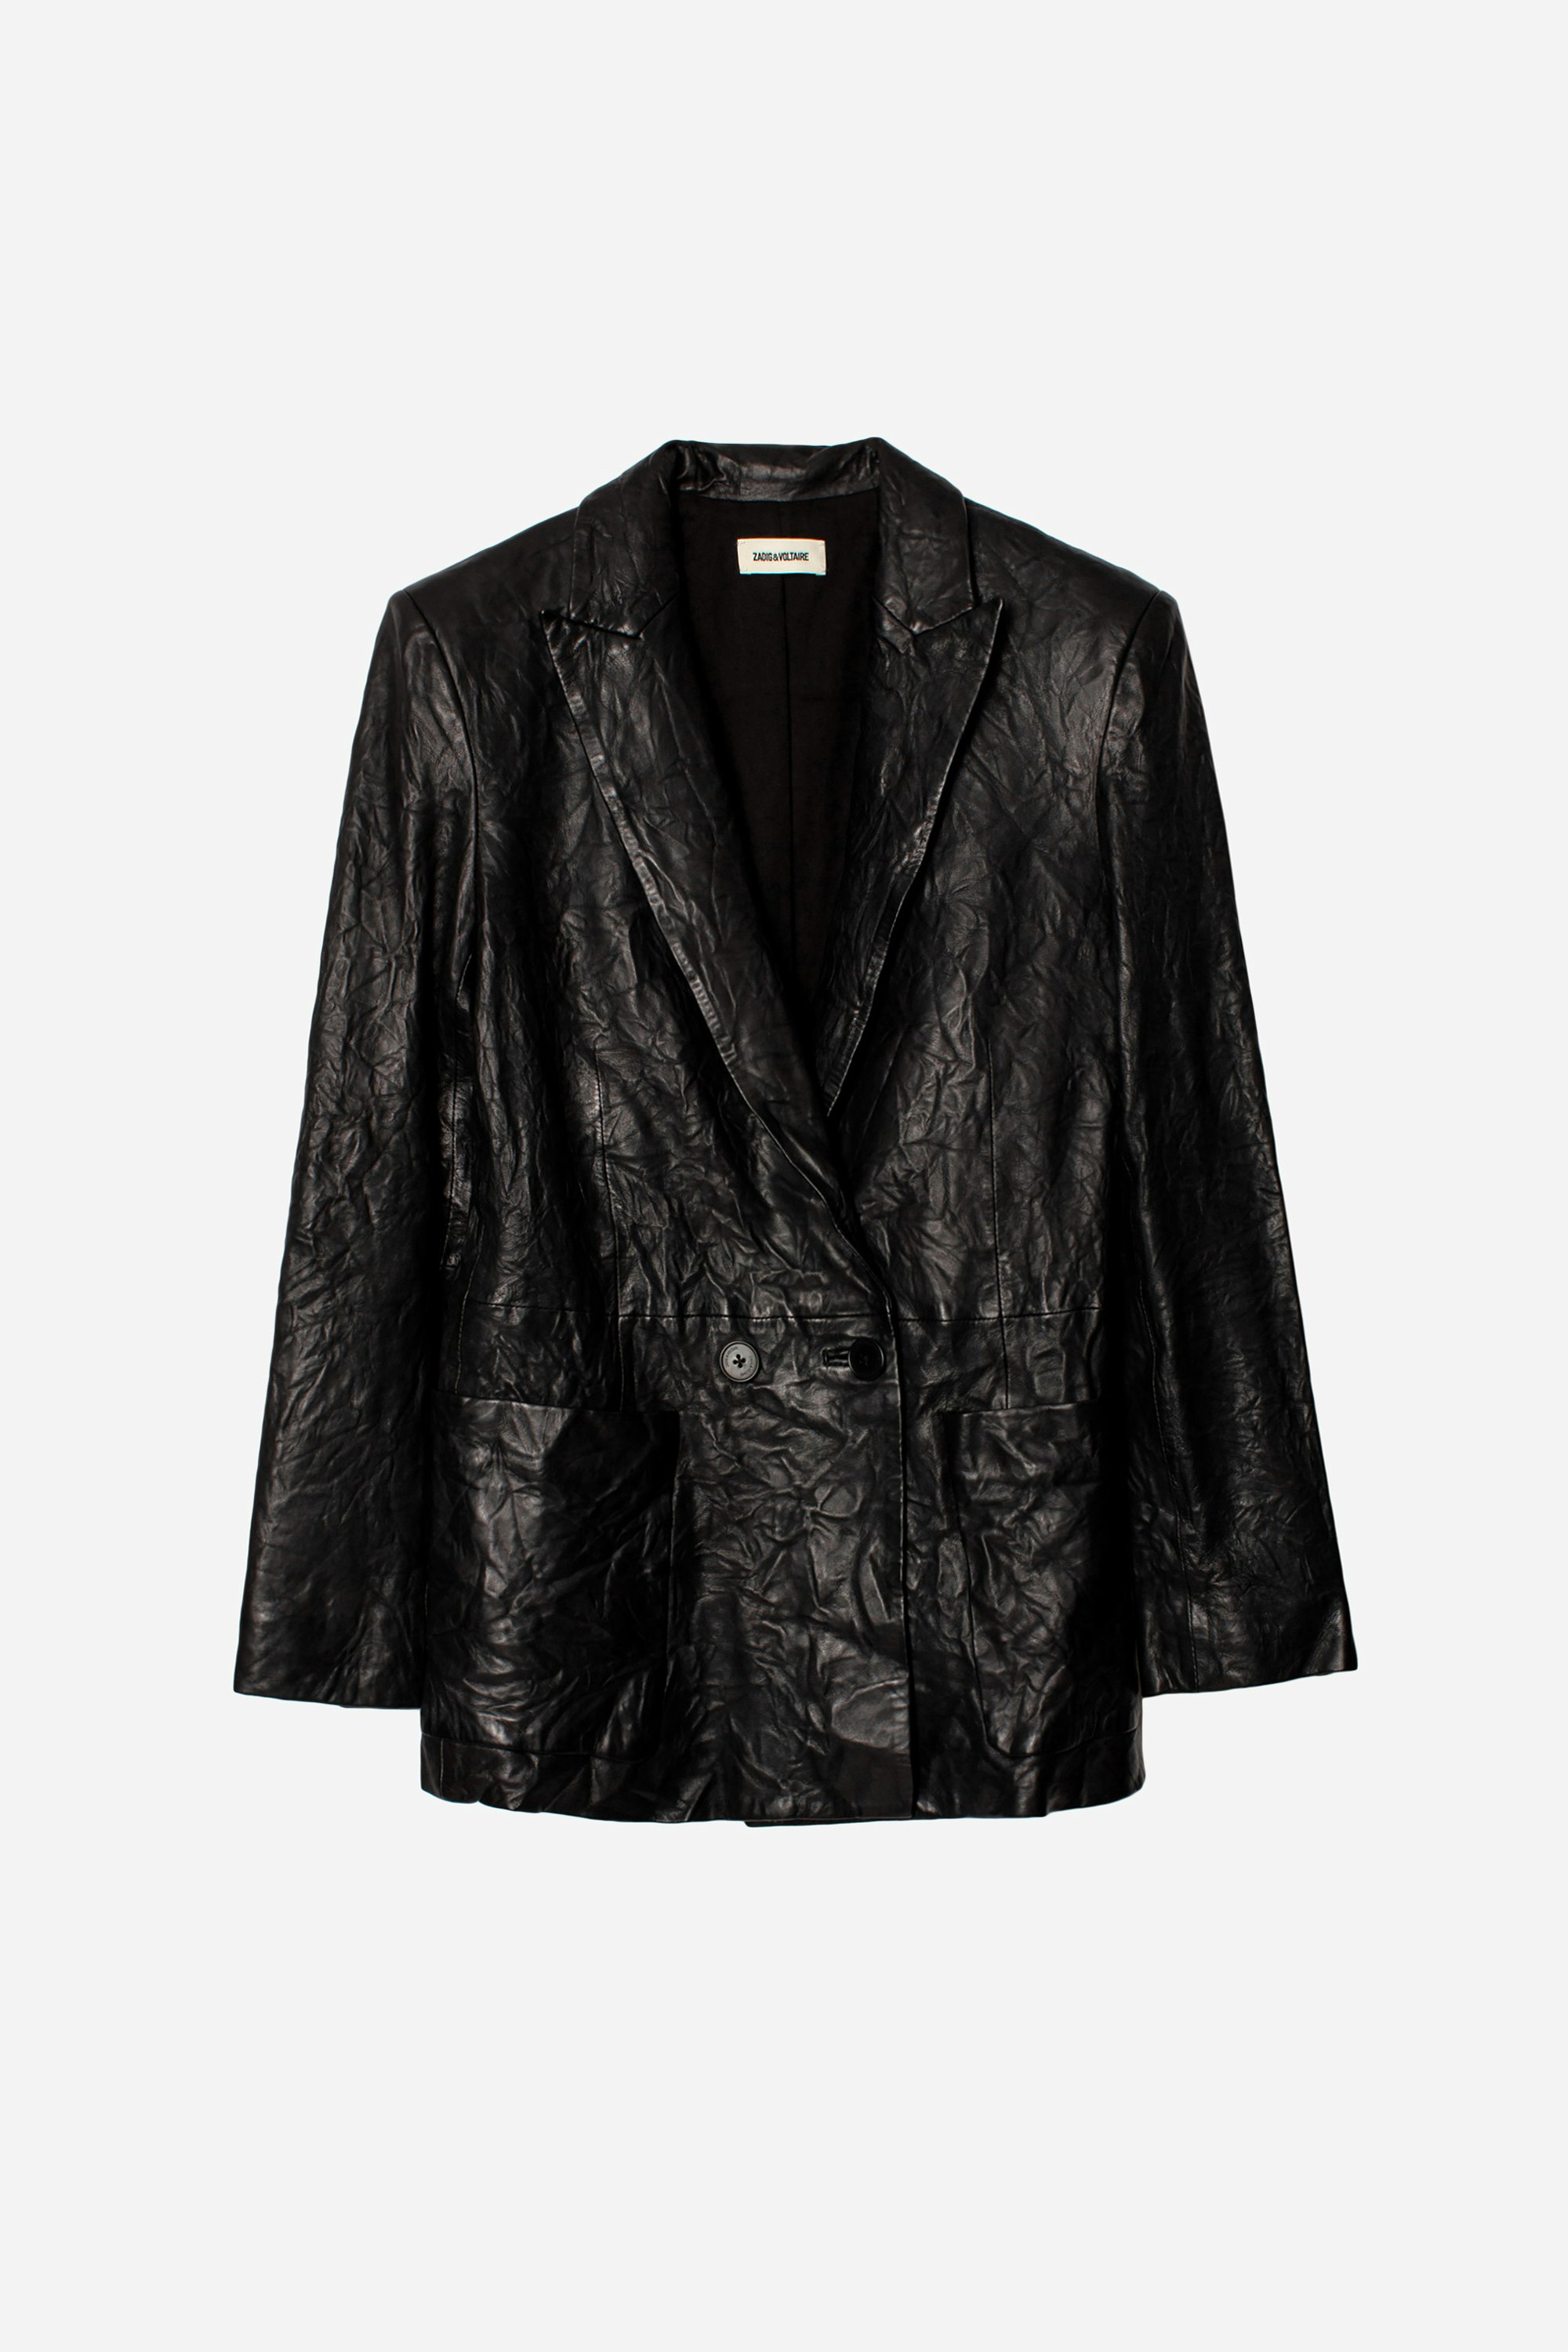 Visco Crinkle Leather Jacket - Women's black crinkled-effect leather jacket.